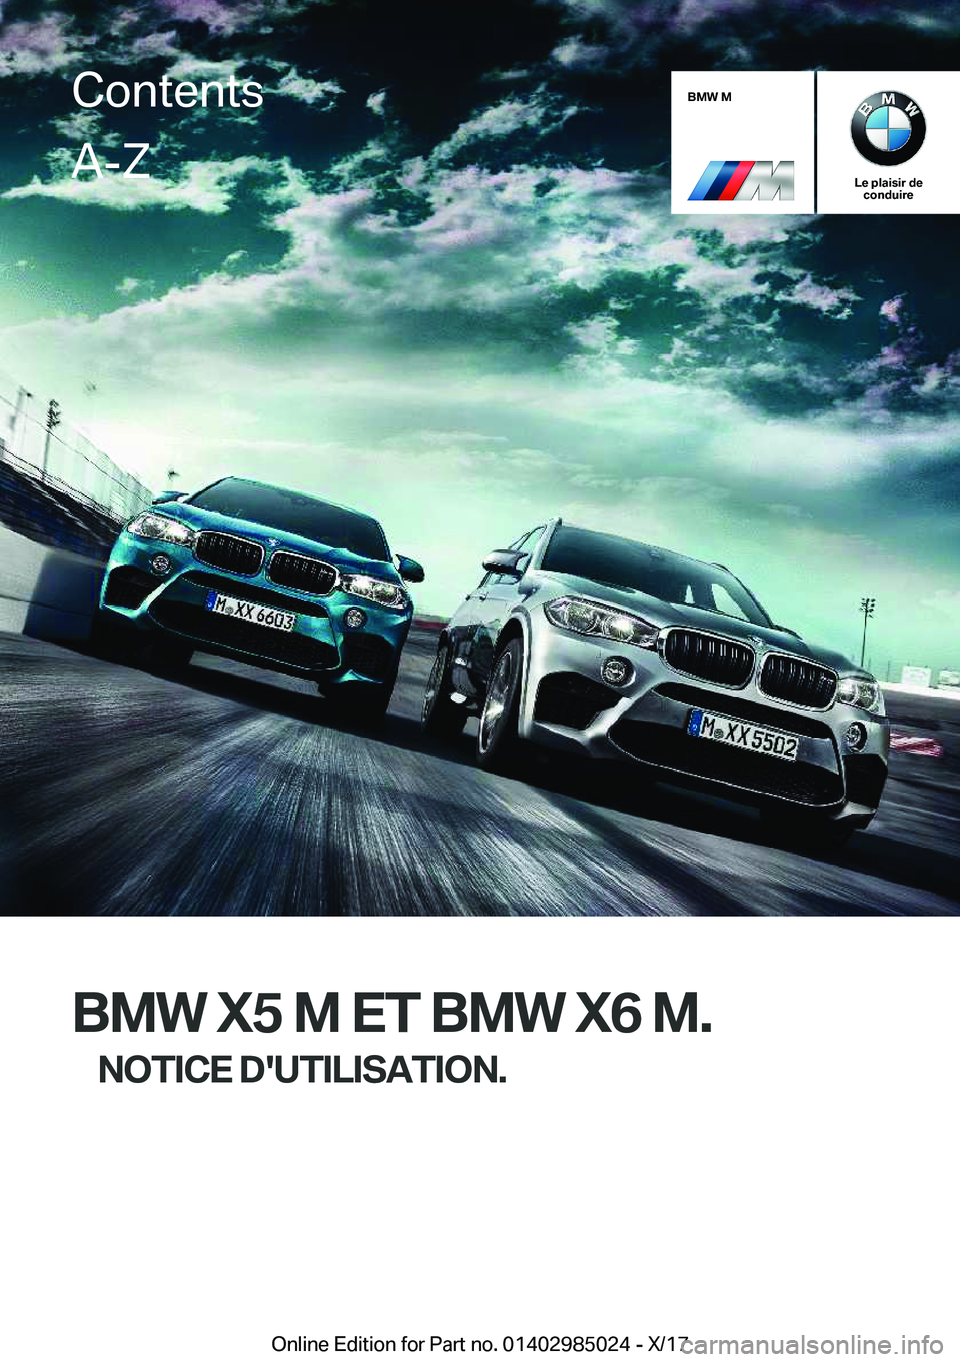 BMW X6 M 2018  Notices Demploi (in French) �B�M�W��M
�L�e��p�l�a�i�s�i�r��d�e�c�o�n�d�u�i�r�e
�B�M�W��X�5��M��E�T��B�M�W��X�6��M�.
�N�O�T�I�C�E��D�'�U�T�I�L�I�S�A�T�I�O�N�.
�C�o�n�t�e�n�t�s�A�-�Z
�O�n�l�i�n�e� �E�d�i�t�i�o�n� �f�